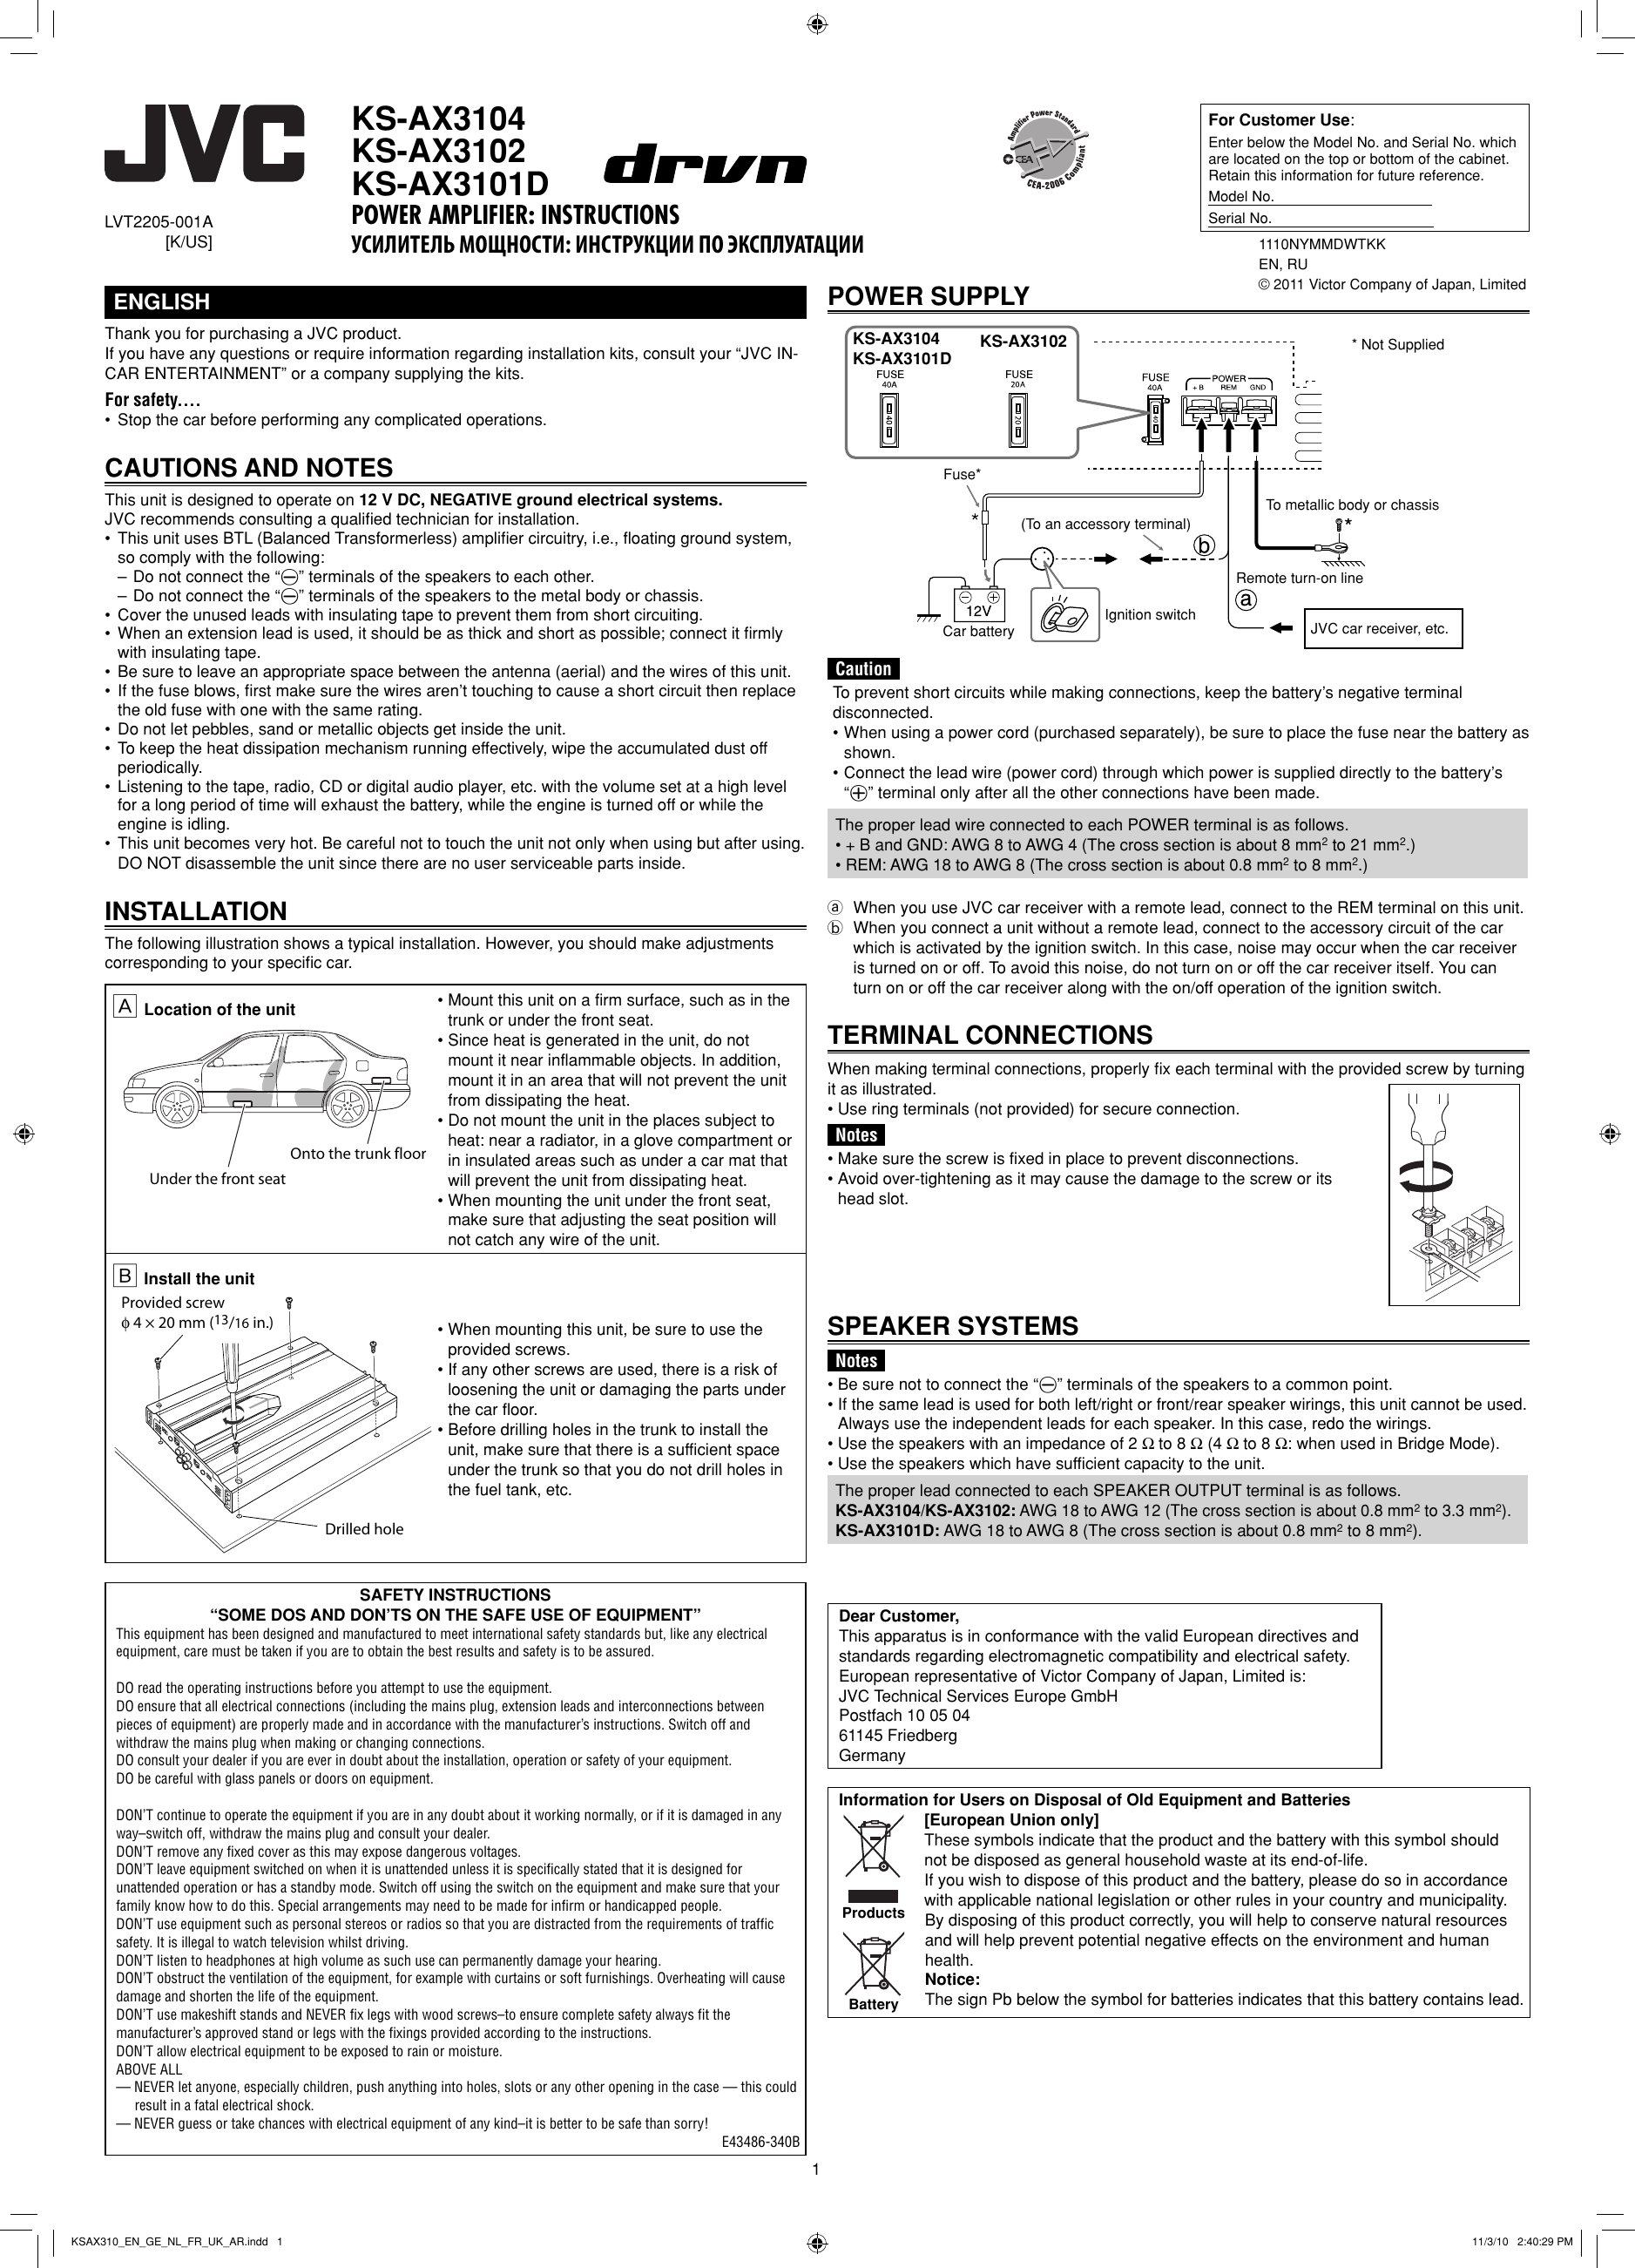 Page 1 of 3 - Jvc Jvc-Car-Amplifier-Ks-Ax3101D-Users-Manual- KS-AX3104/KS-AX3102/KS-AX3101D  Jvc-car-amplifier-ks-ax3101d-users-manual